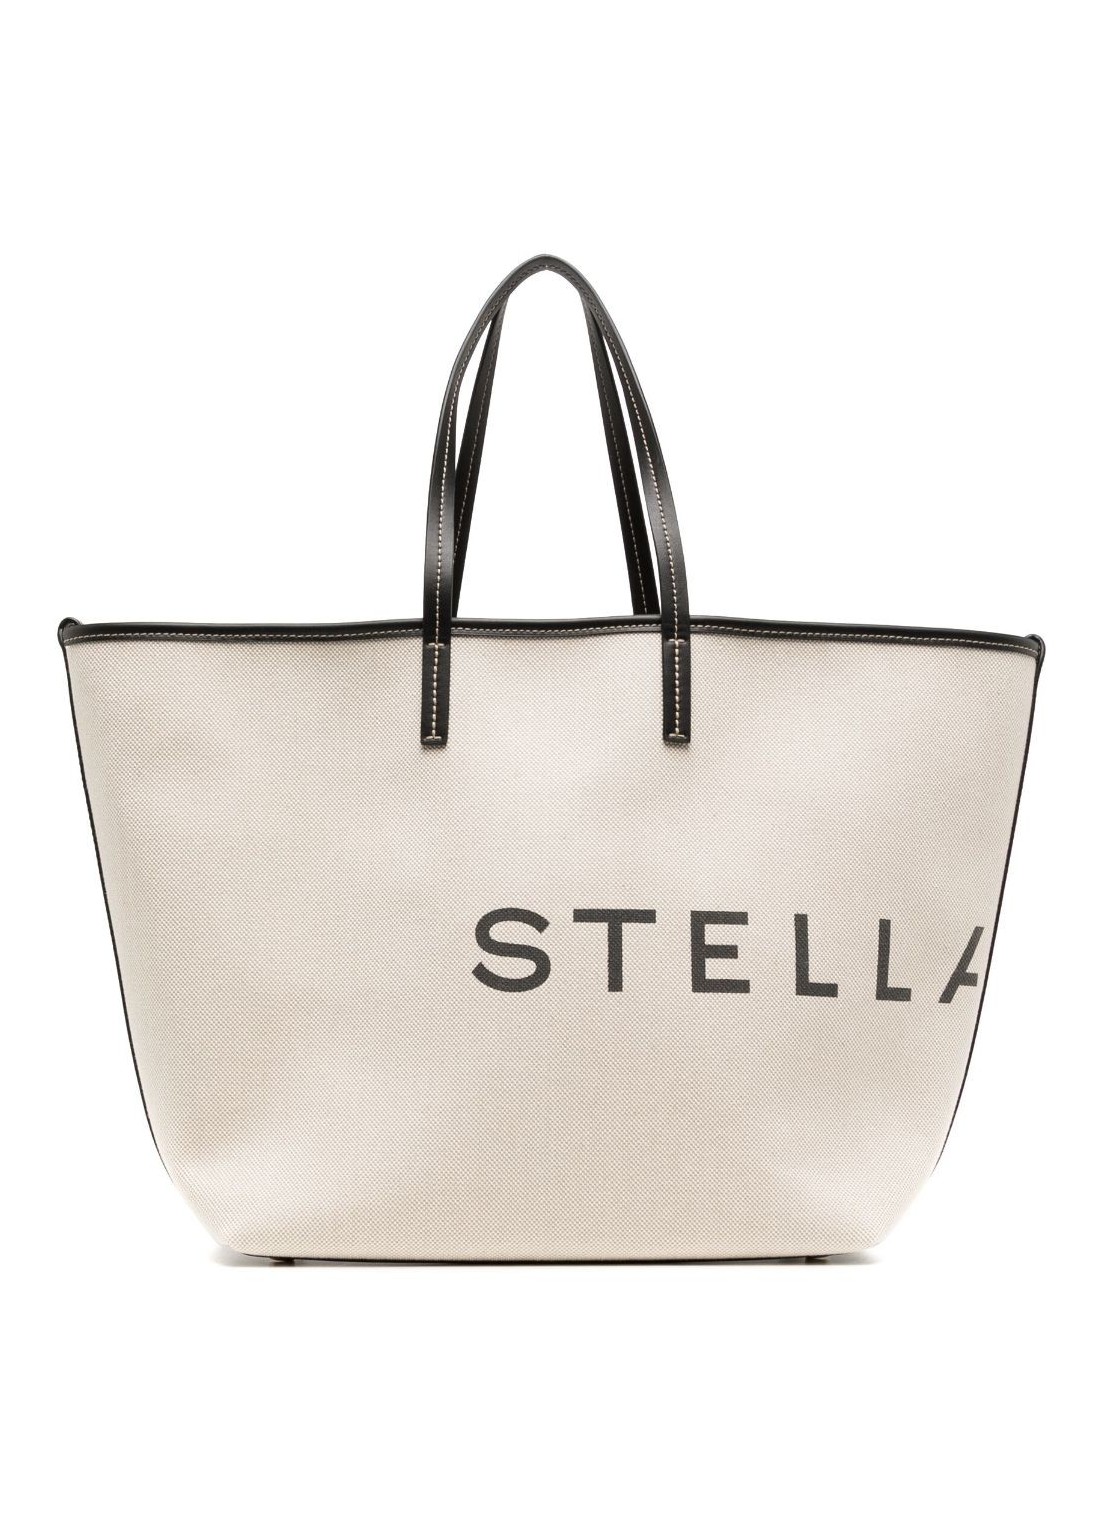 Handbag stella mccartney handbag woman tote bag eco salt and pepper canvas 7b0048wp0221 9043 talla b